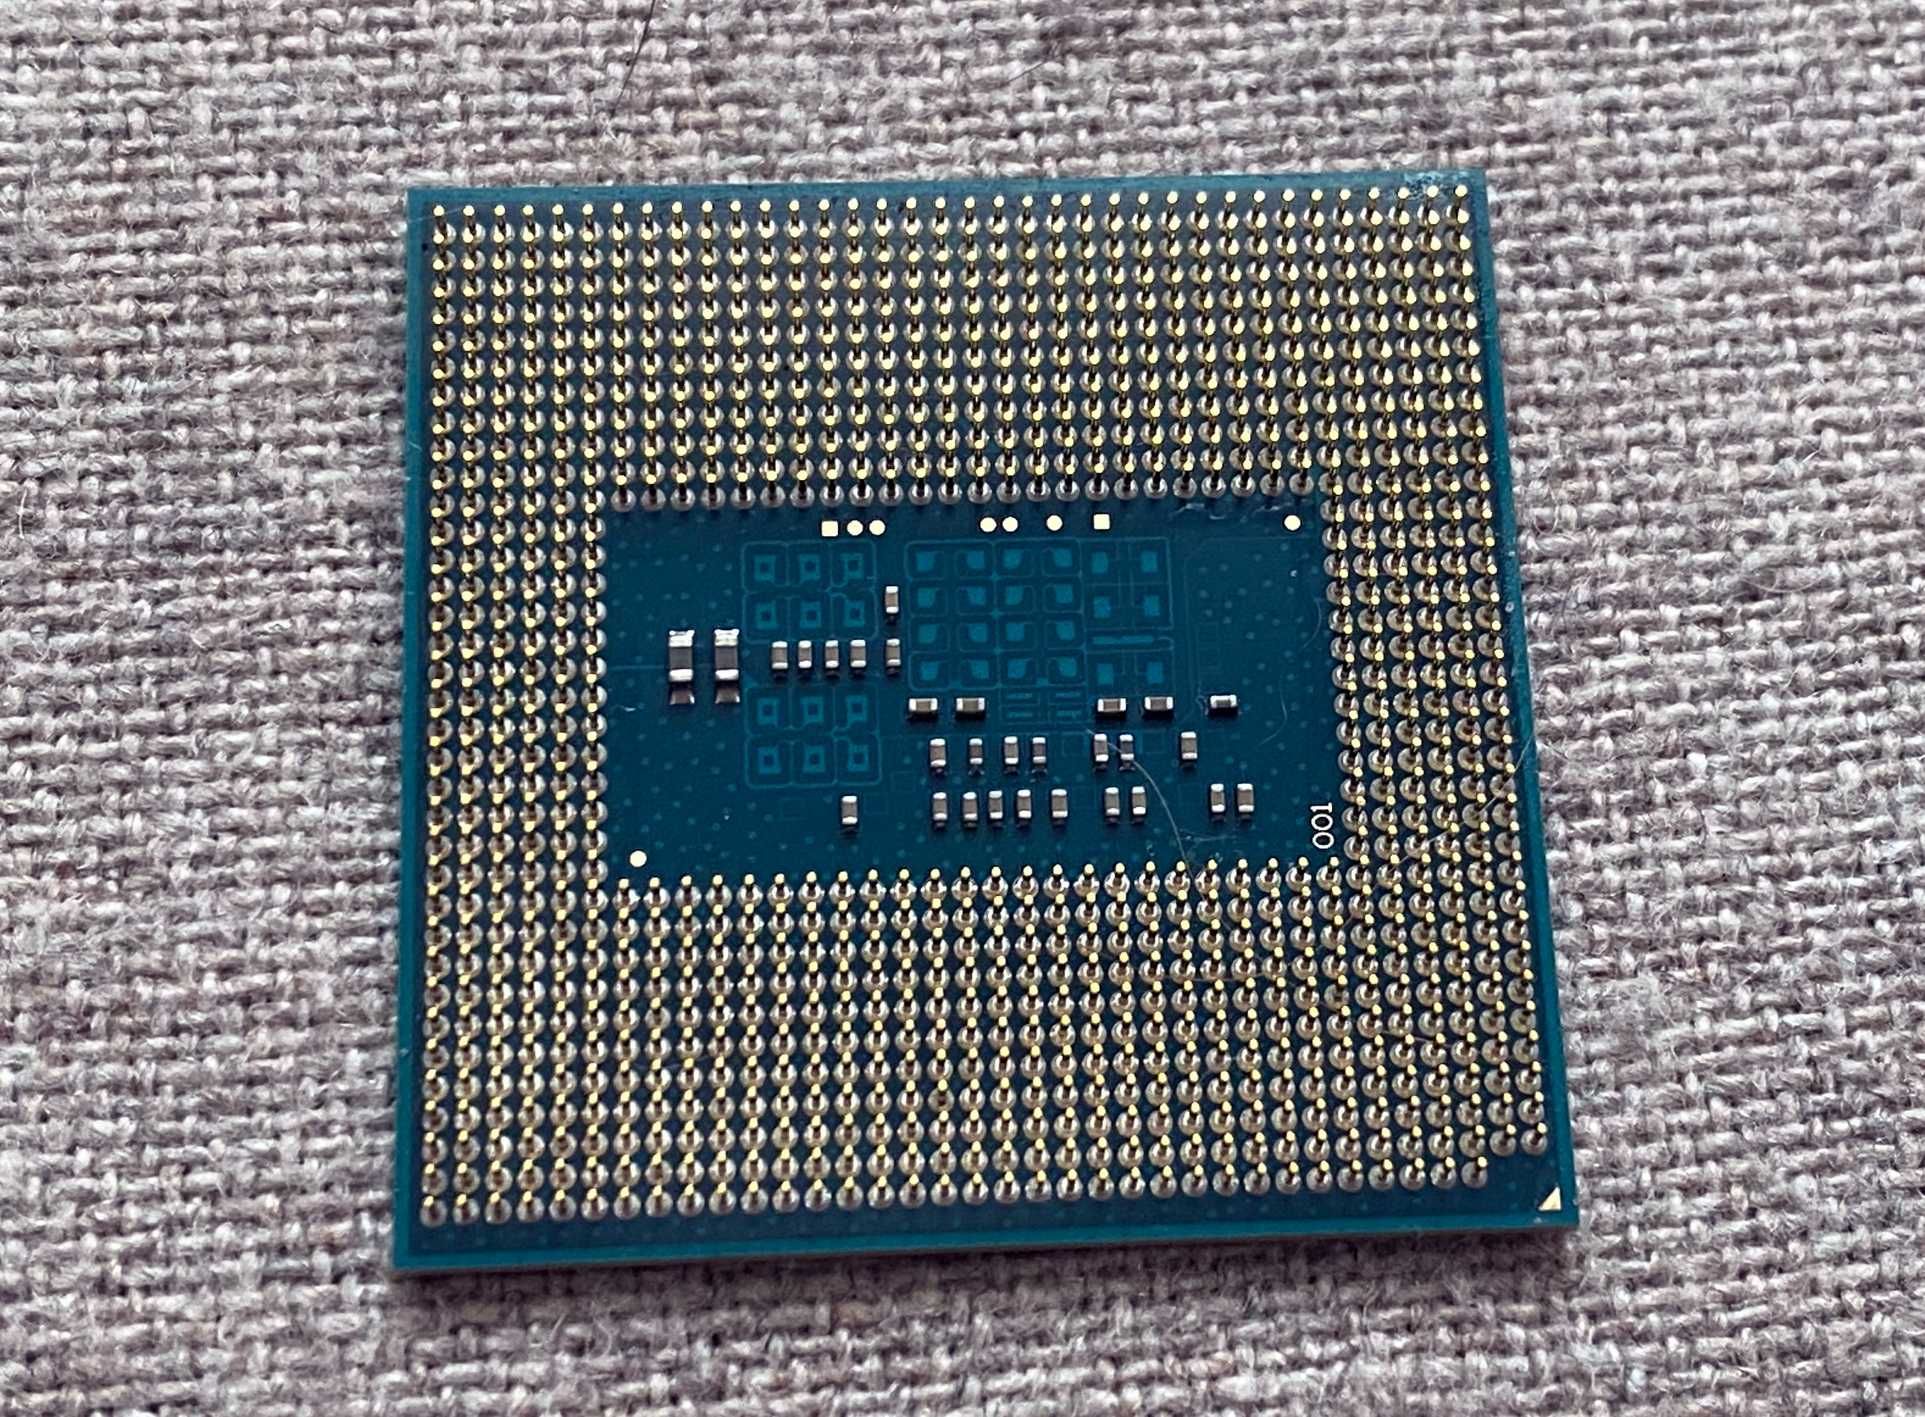 Procesor laptop SR1L2 Intel Core i5-4310M - probat si verificat